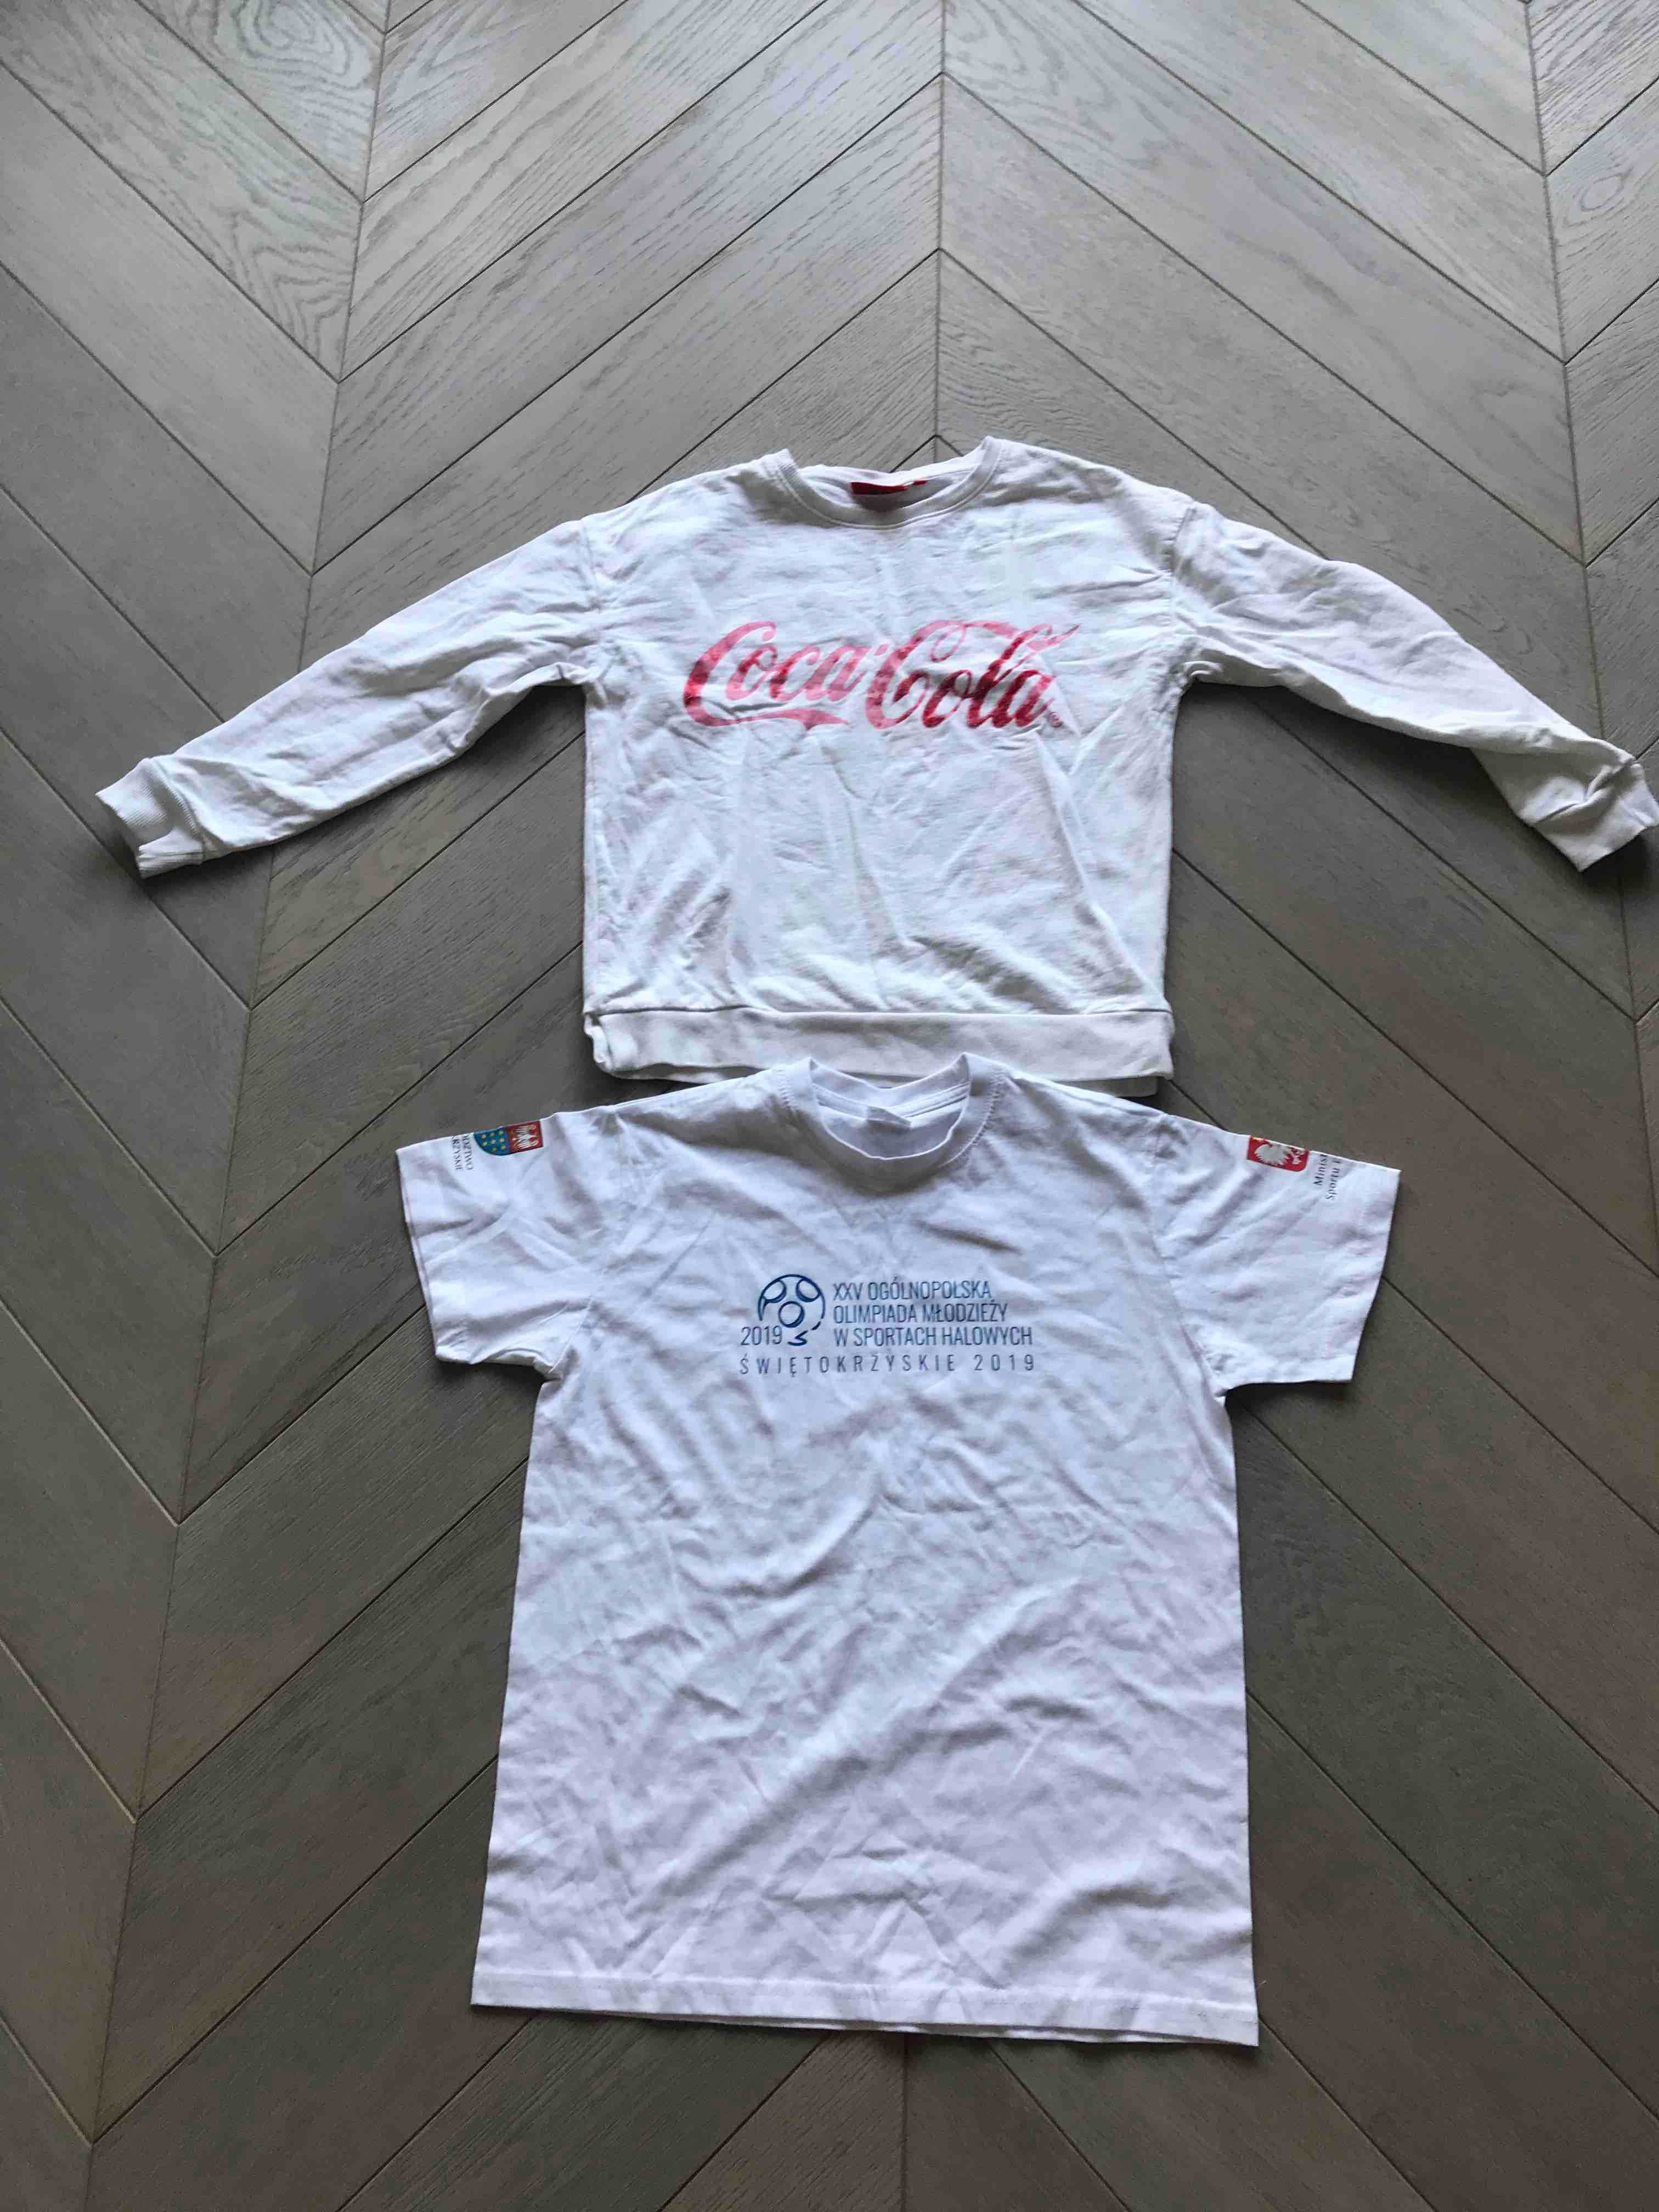 bluza z napisem coca-cola oraz koszulka